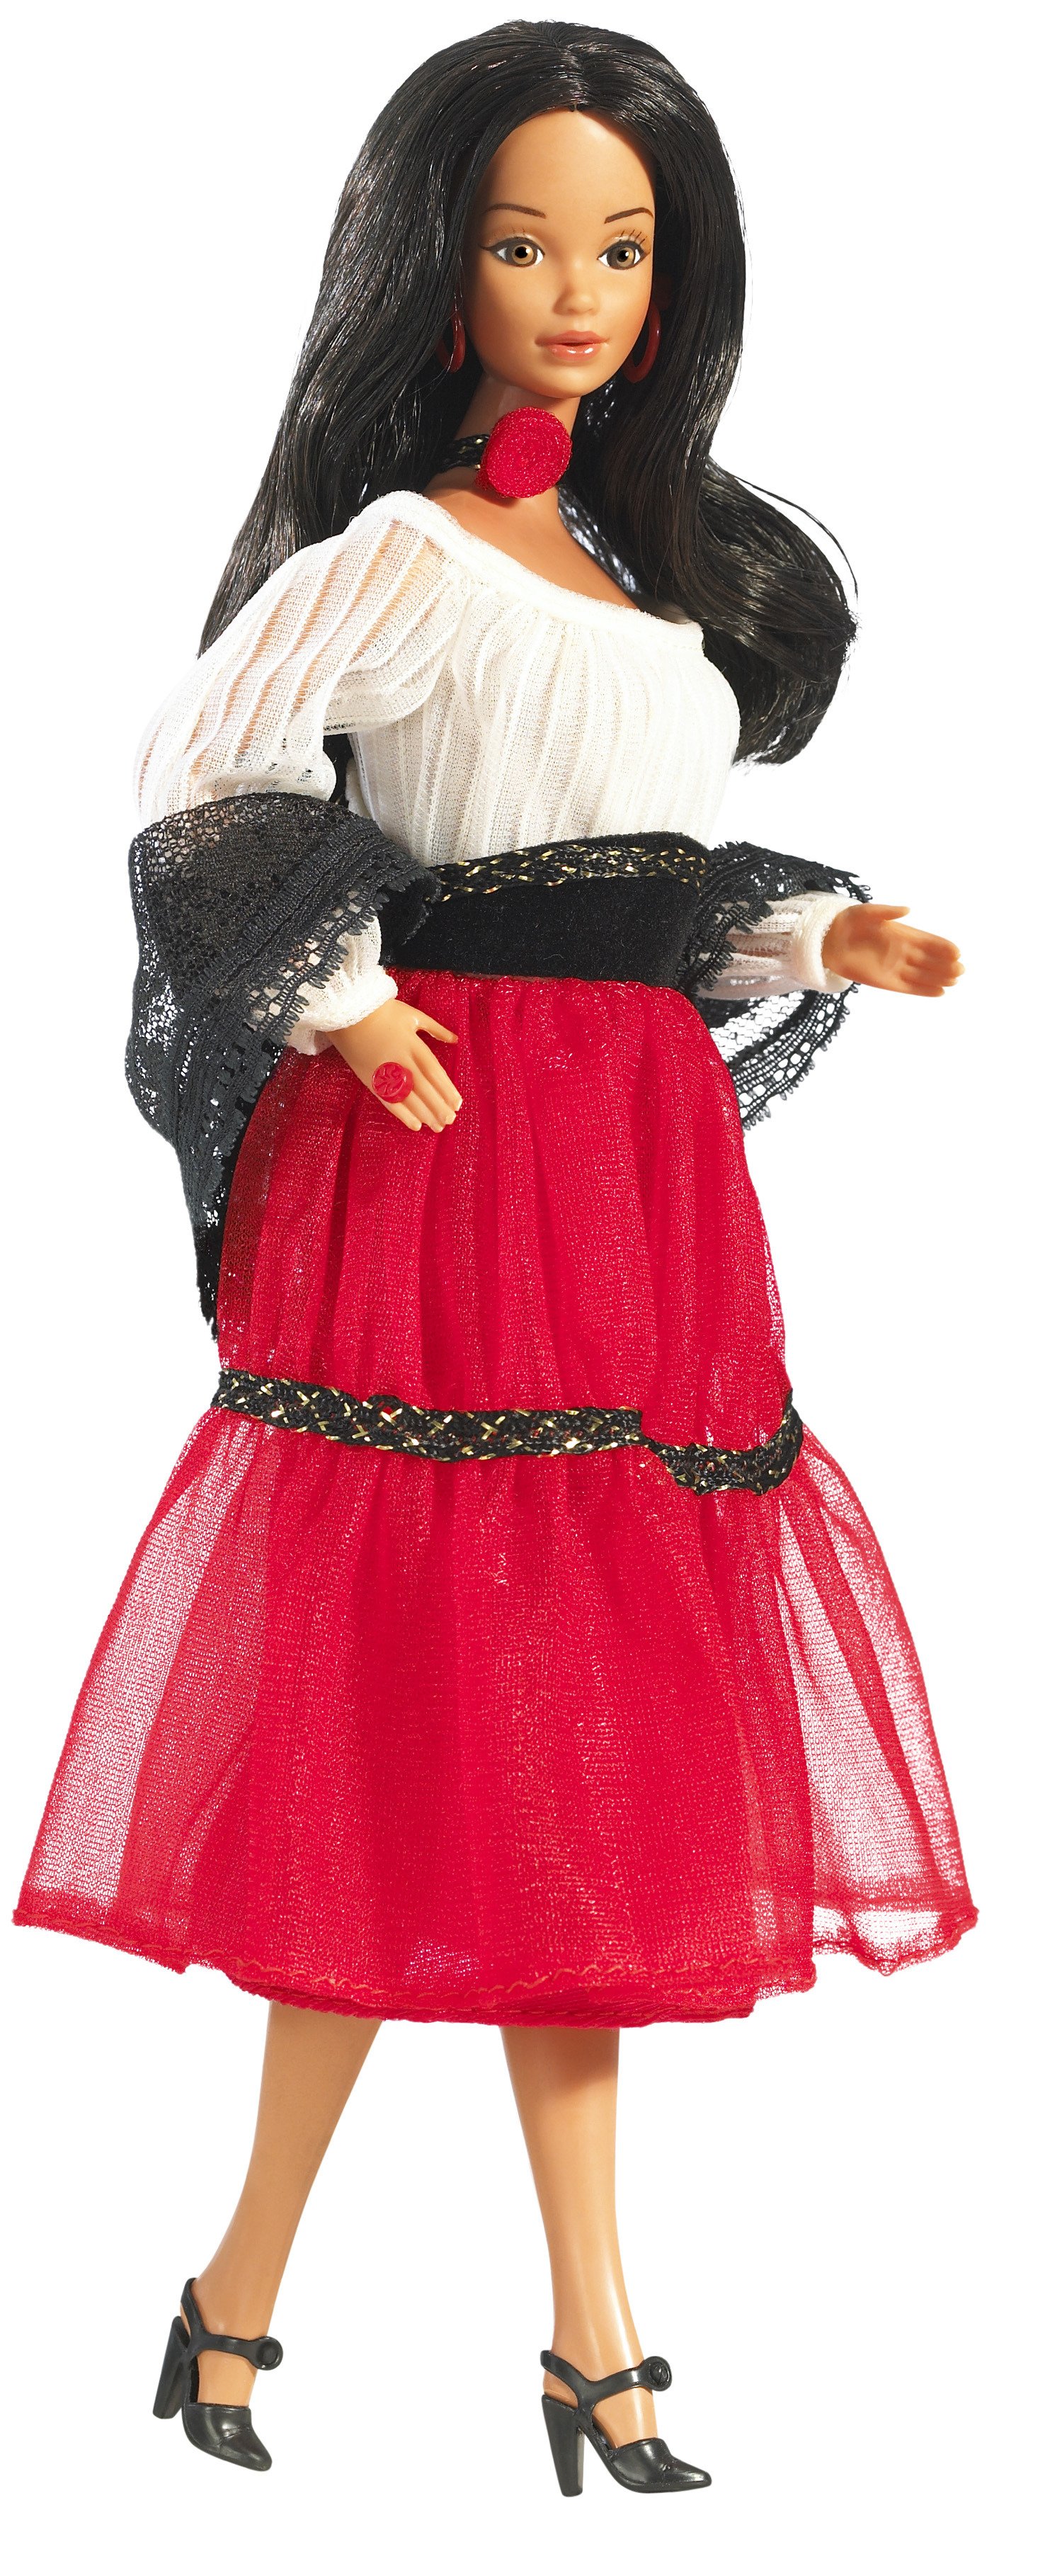 1980-Barbie-Dolls-Hispanic-Doll.jpg